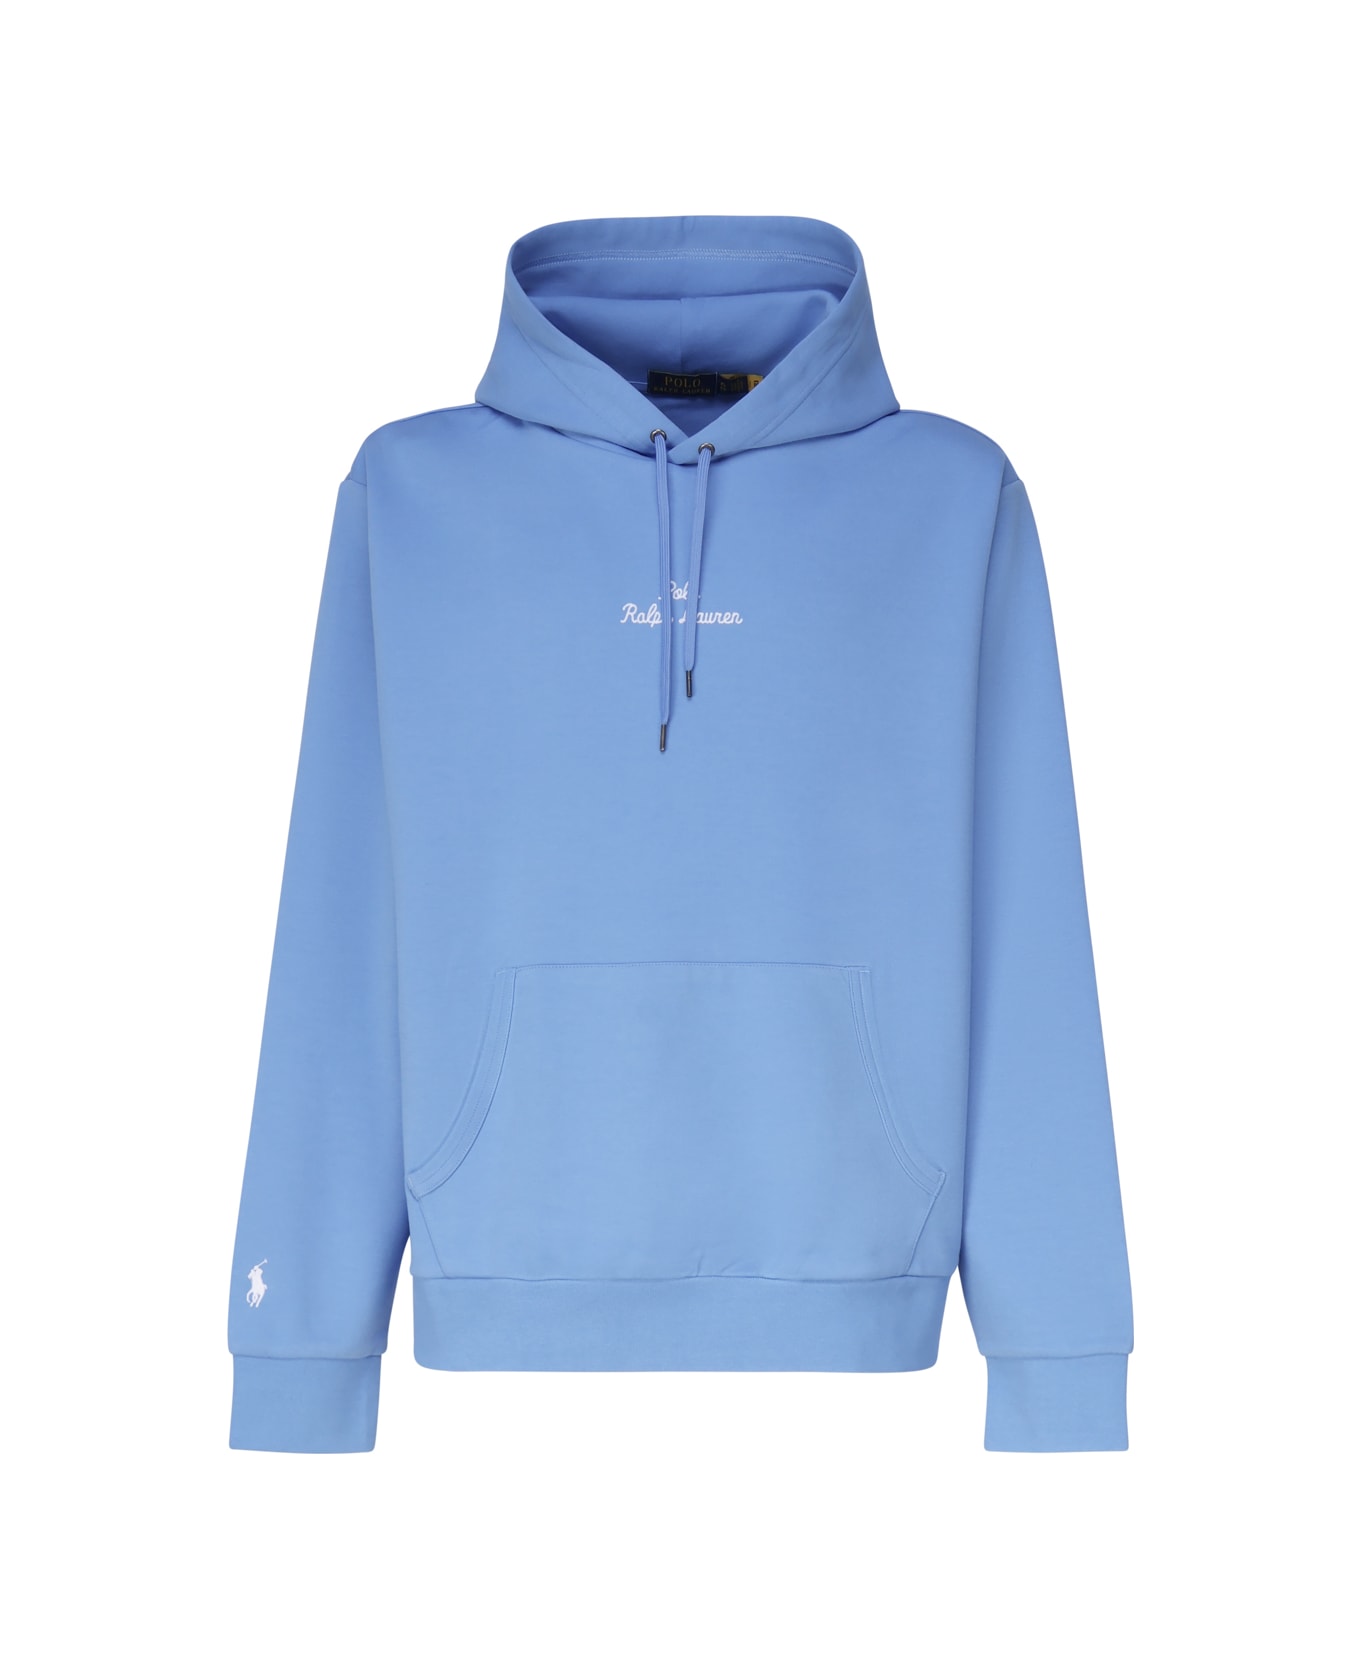 Polo Ralph Lauren Sweatshirt With Embroidery - Light blue